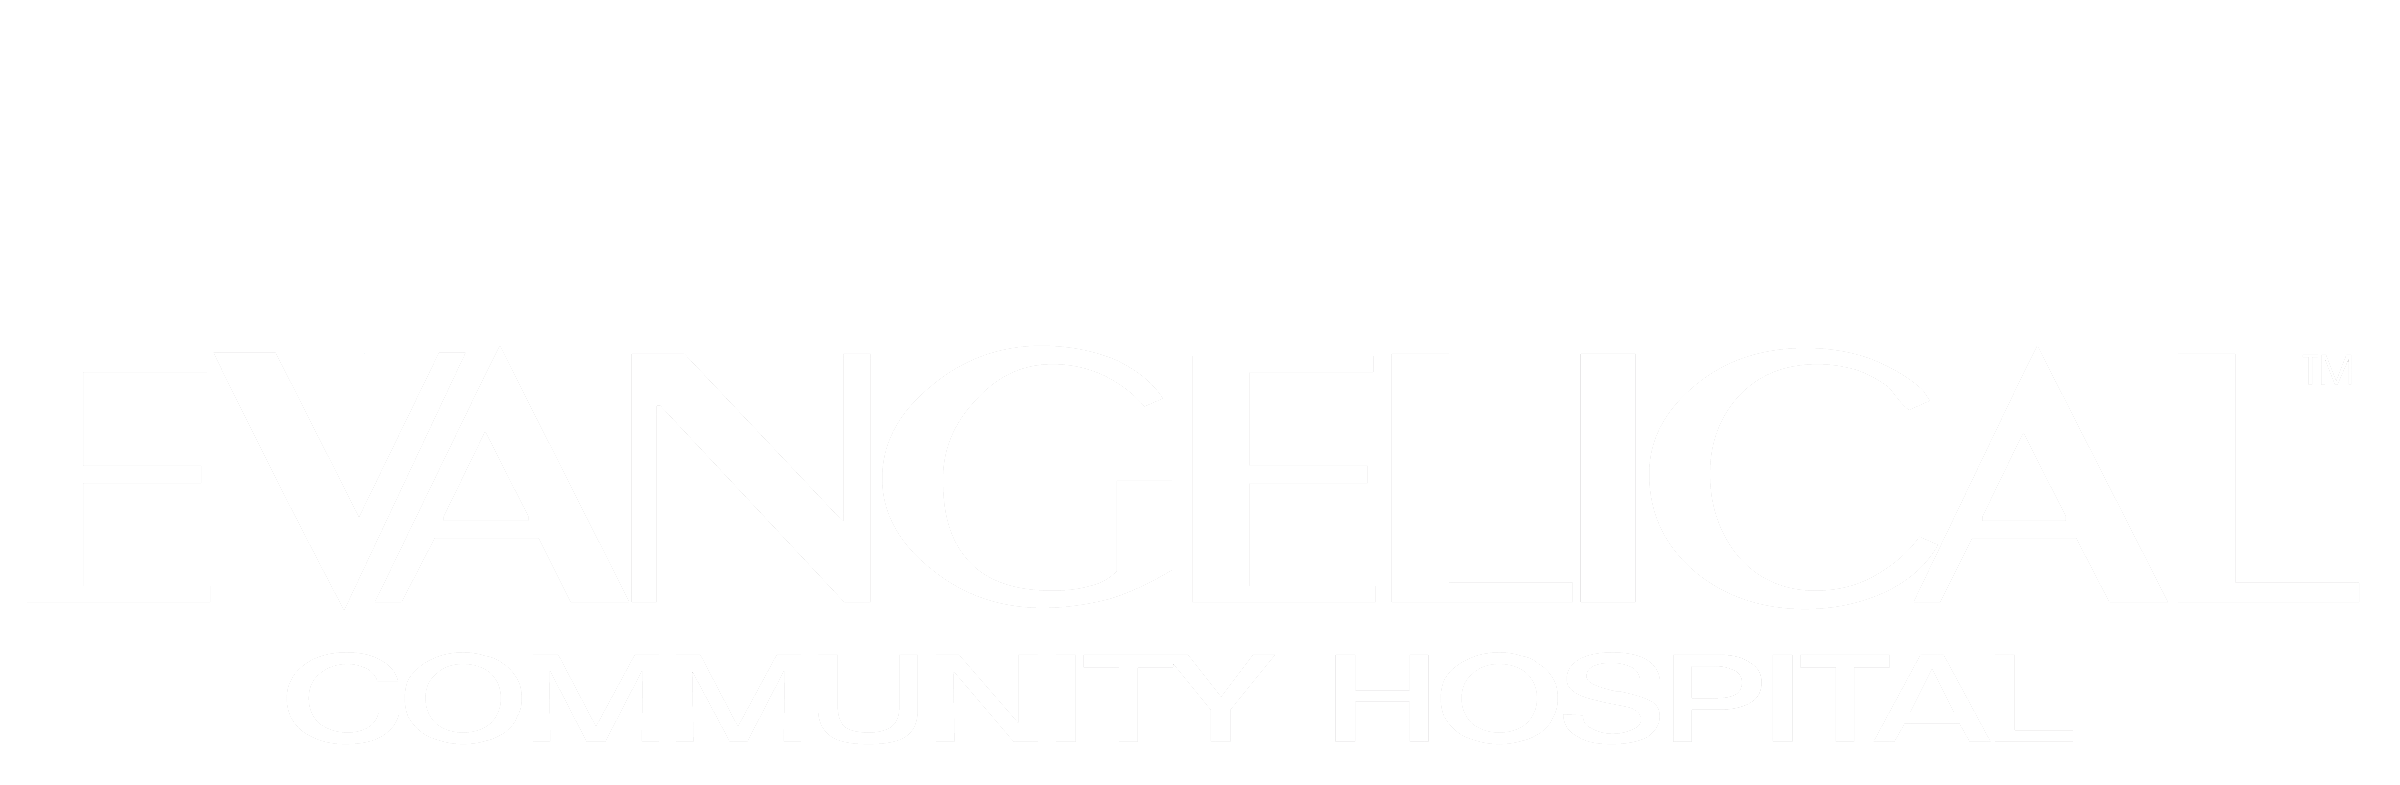 Evangelical Logo